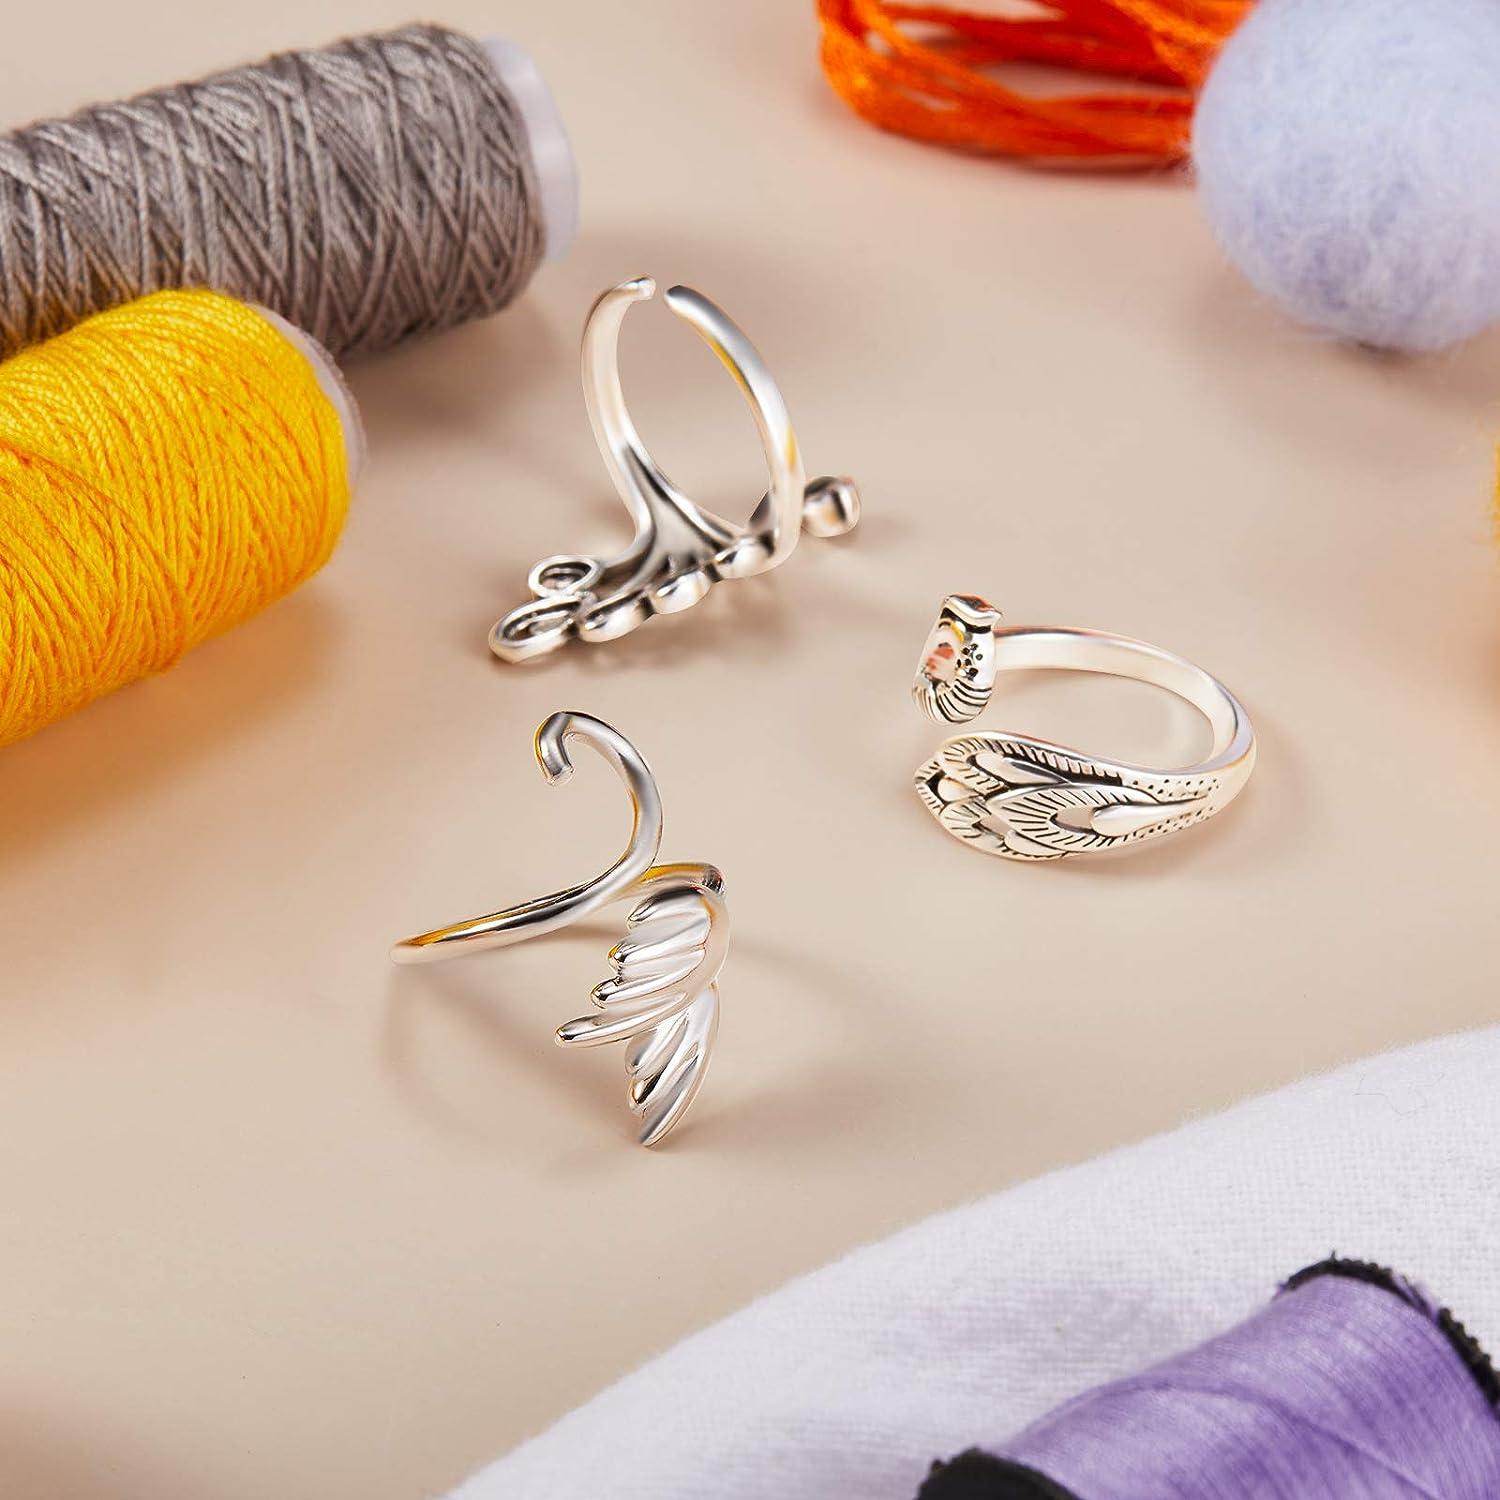 16PCS Fashion Gift Finger Knitting Rings Crochet Rings for Daily Knitting  Sewing